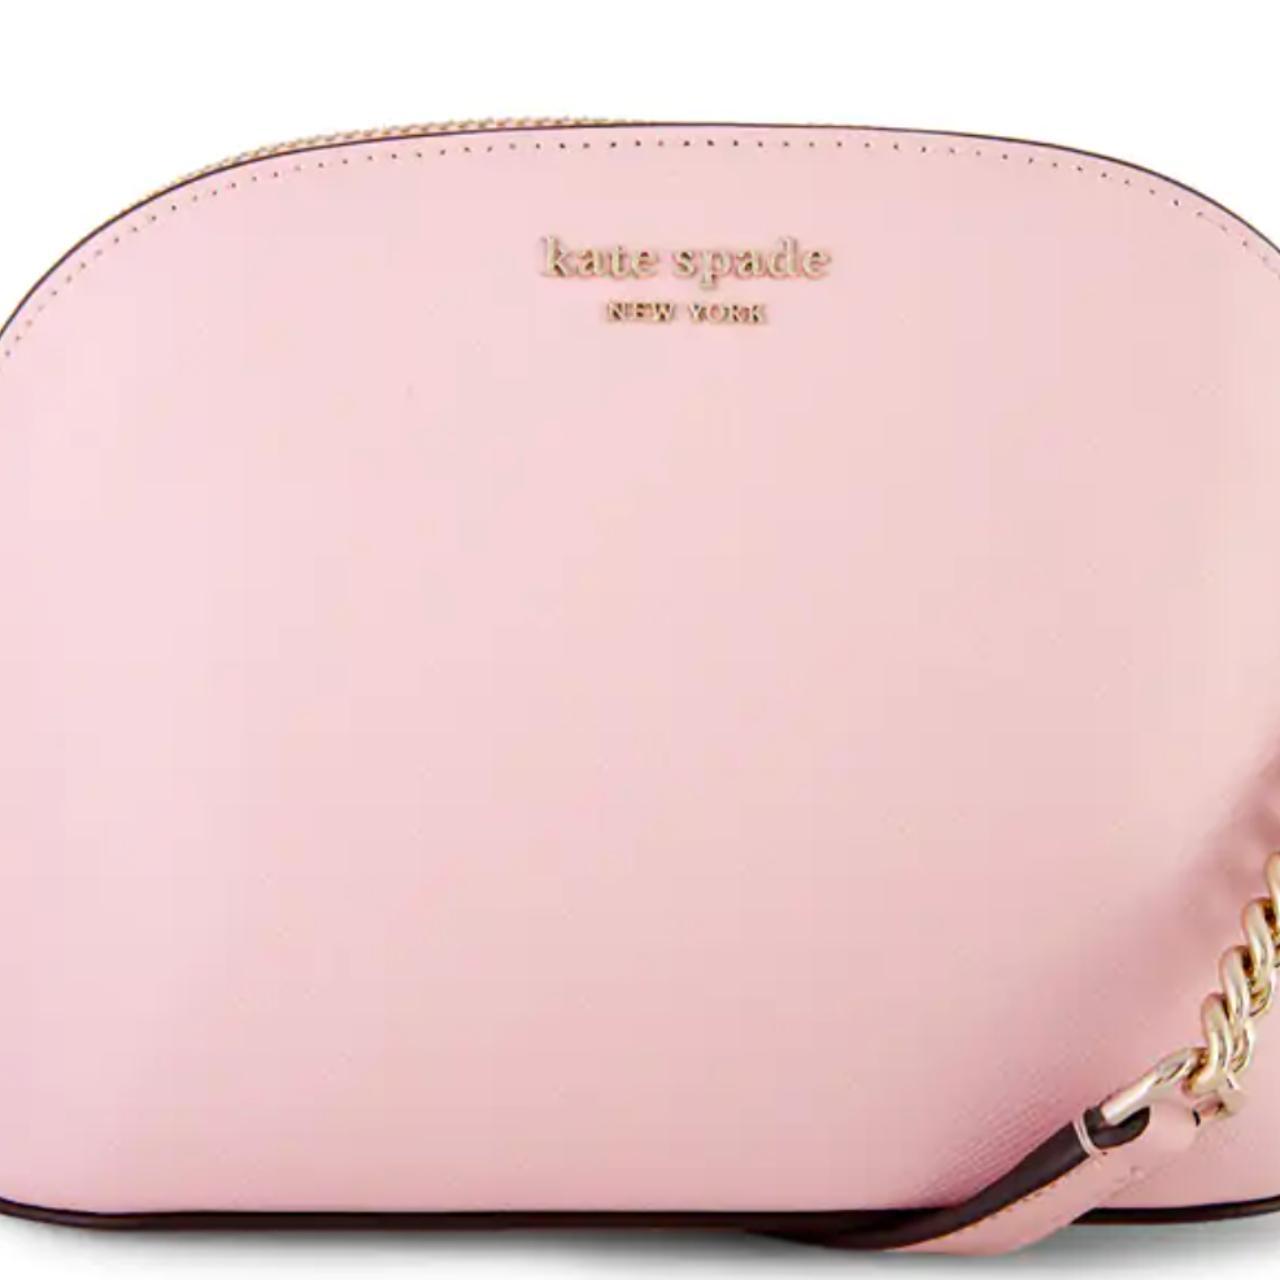 Kate spade pink crossbody bag selling for... - Depop